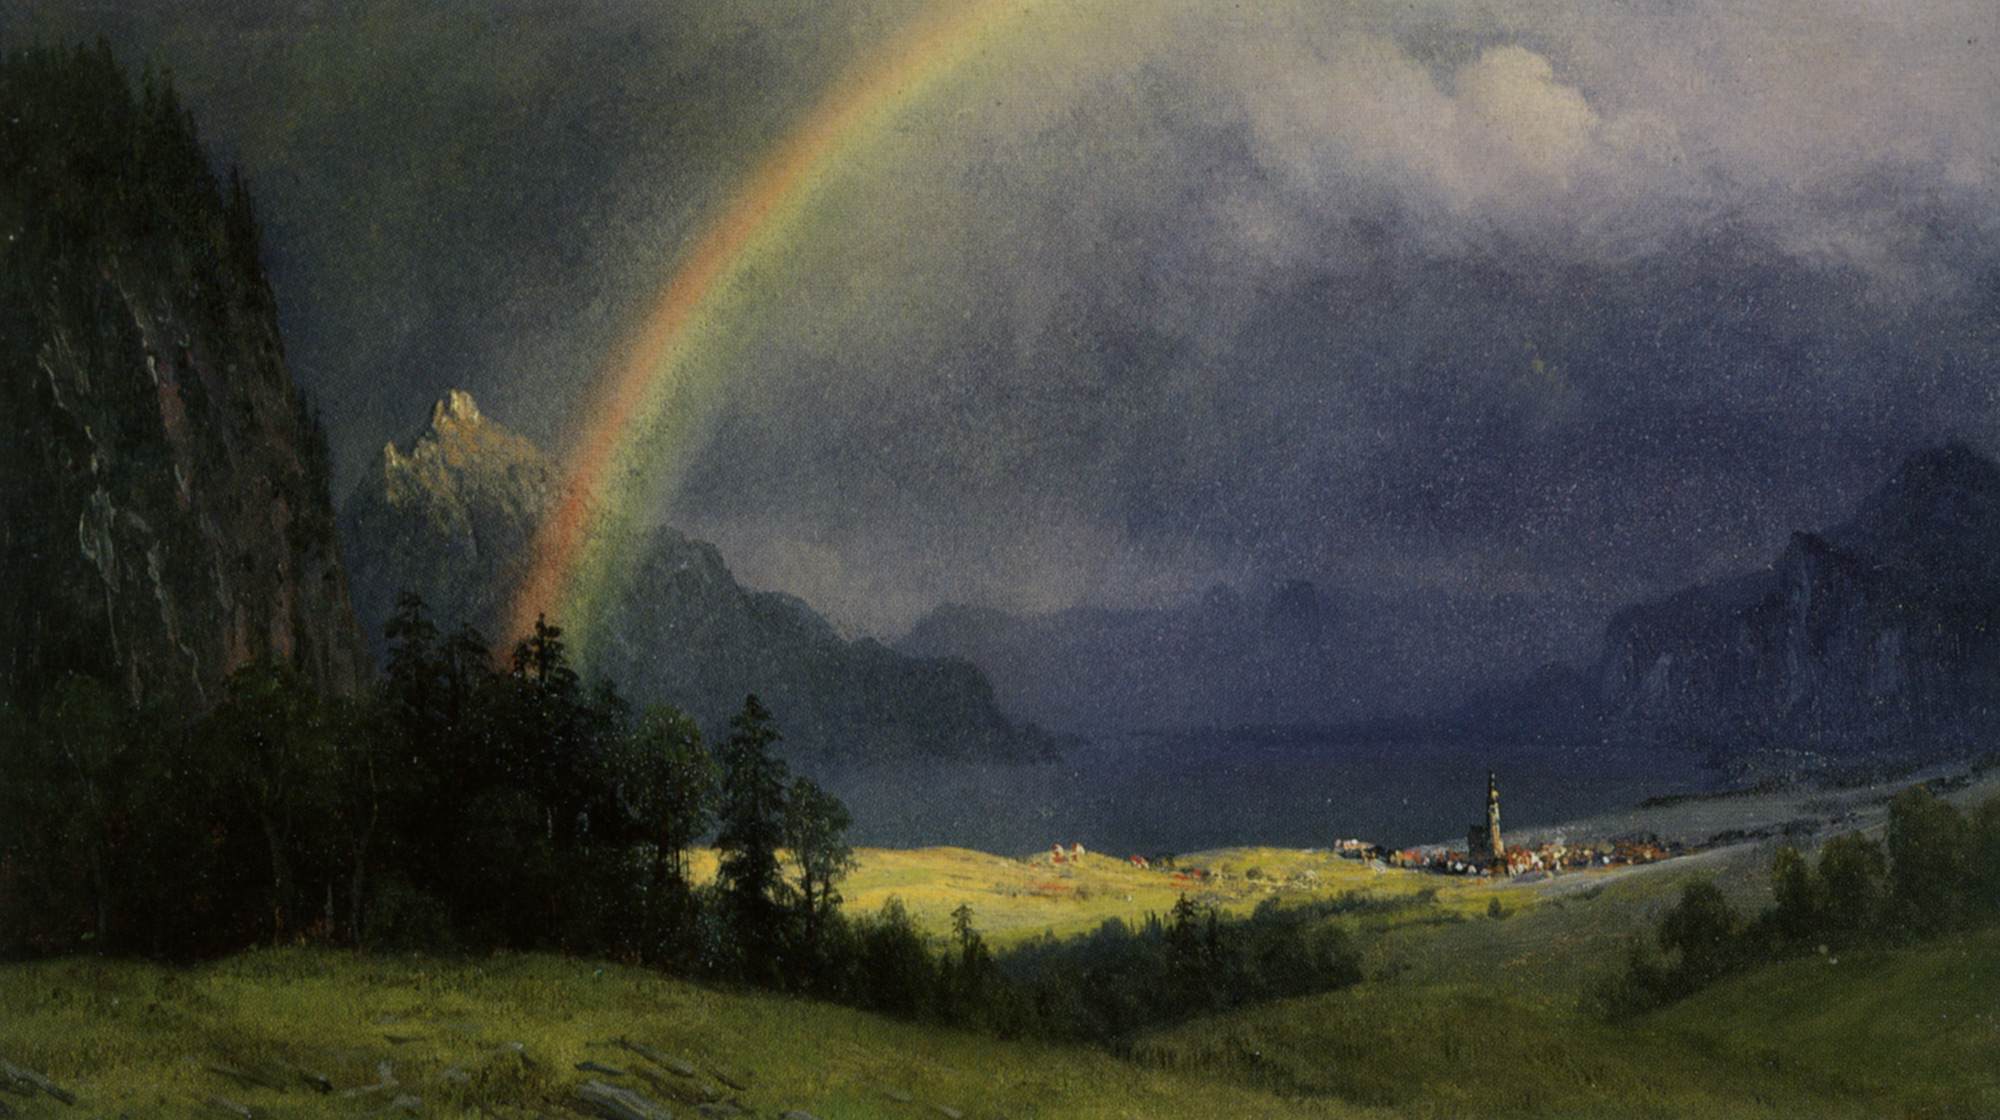 Albert Bierstadt, "After the Shower"